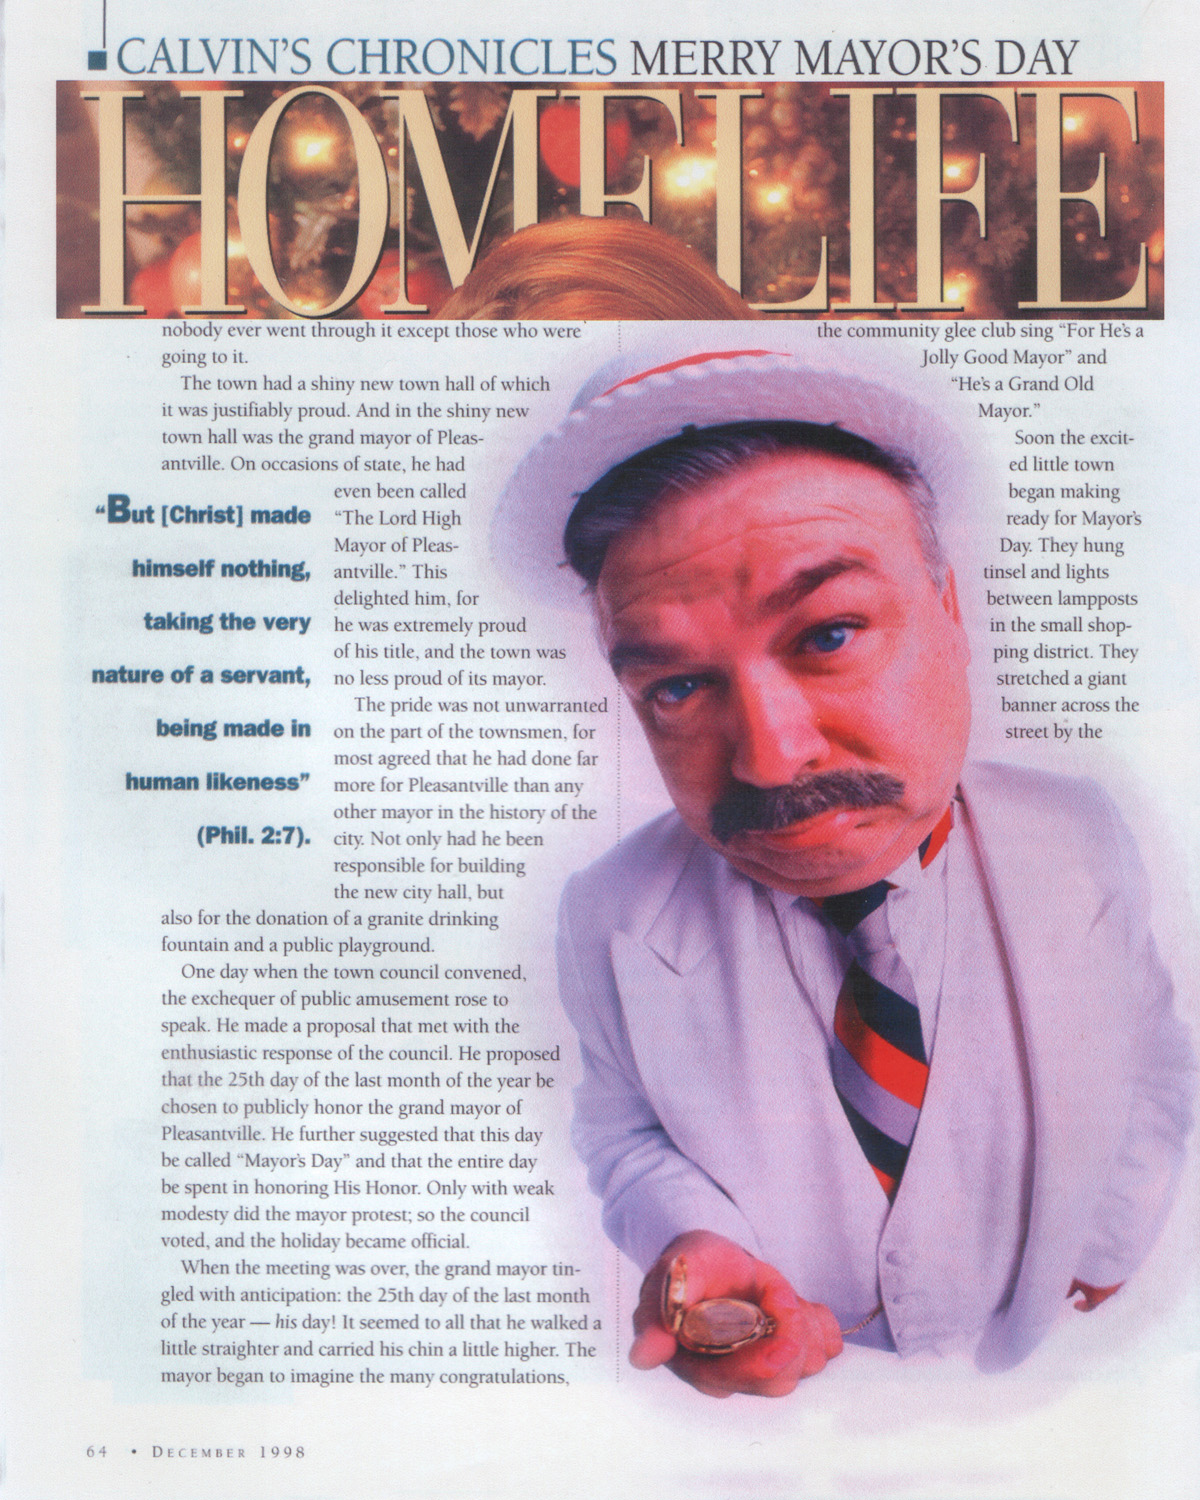 Homelife 1 magazine article